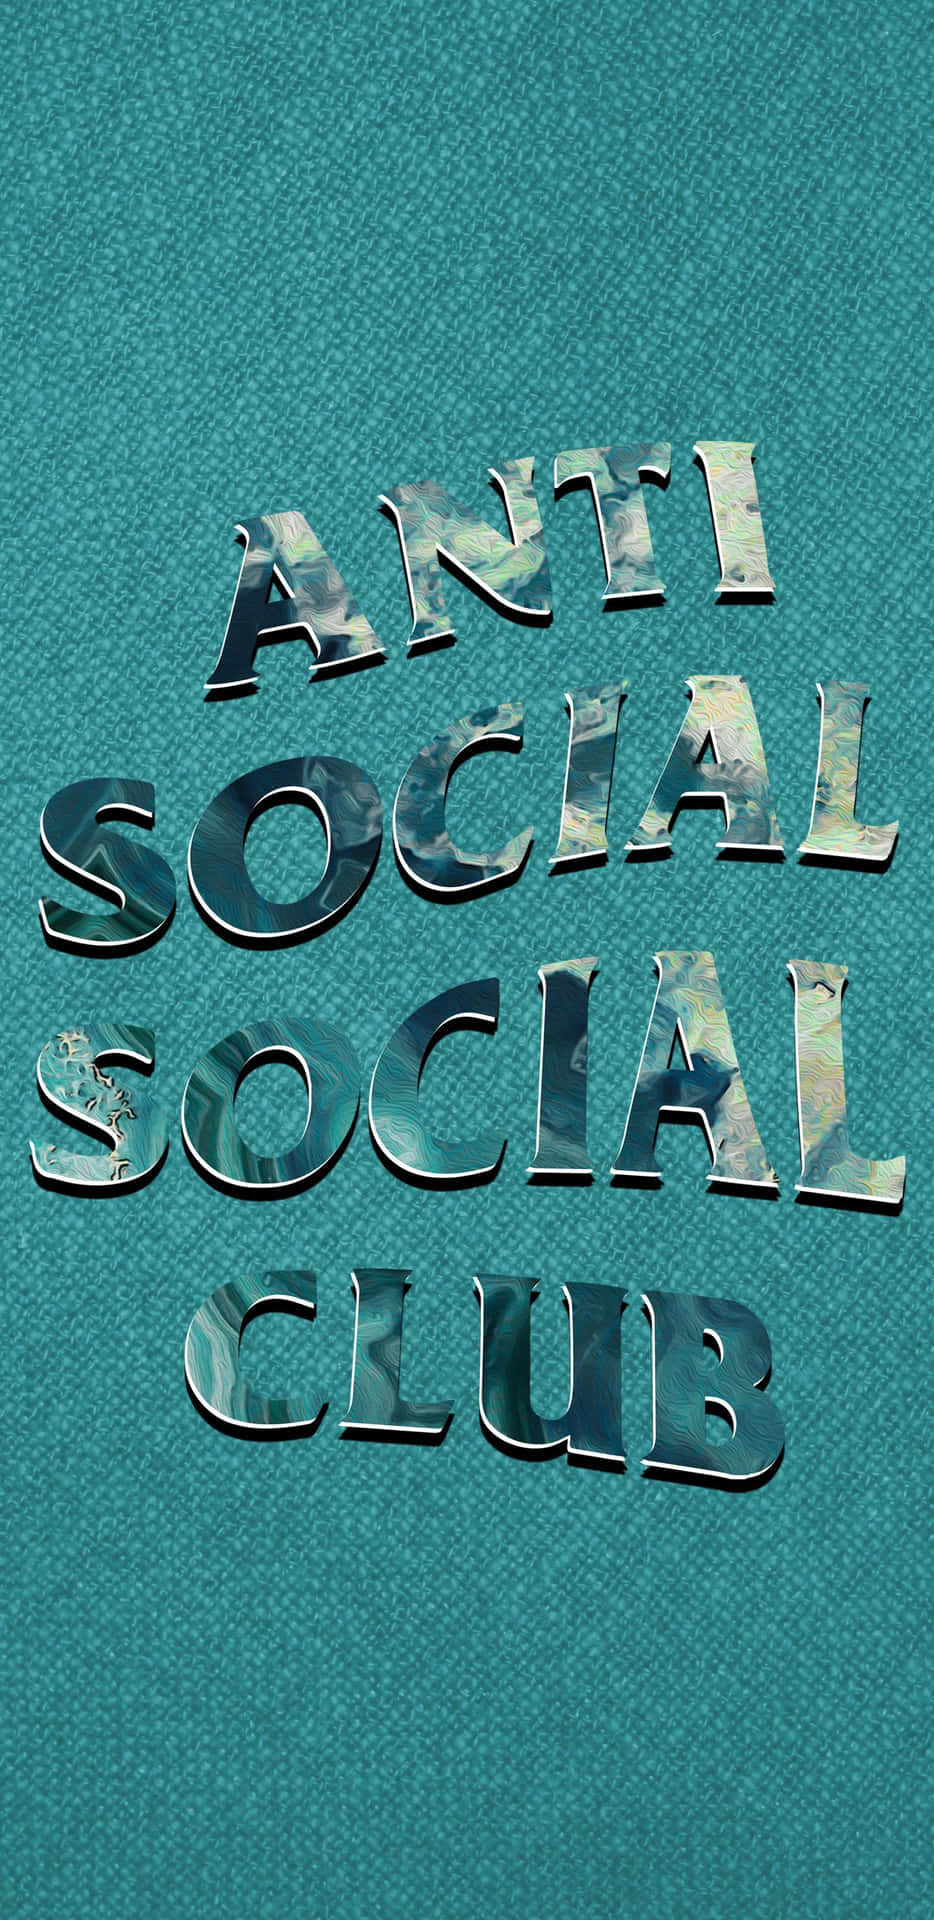 Skenandesilver Anti Social Club Iphone Wallpaper